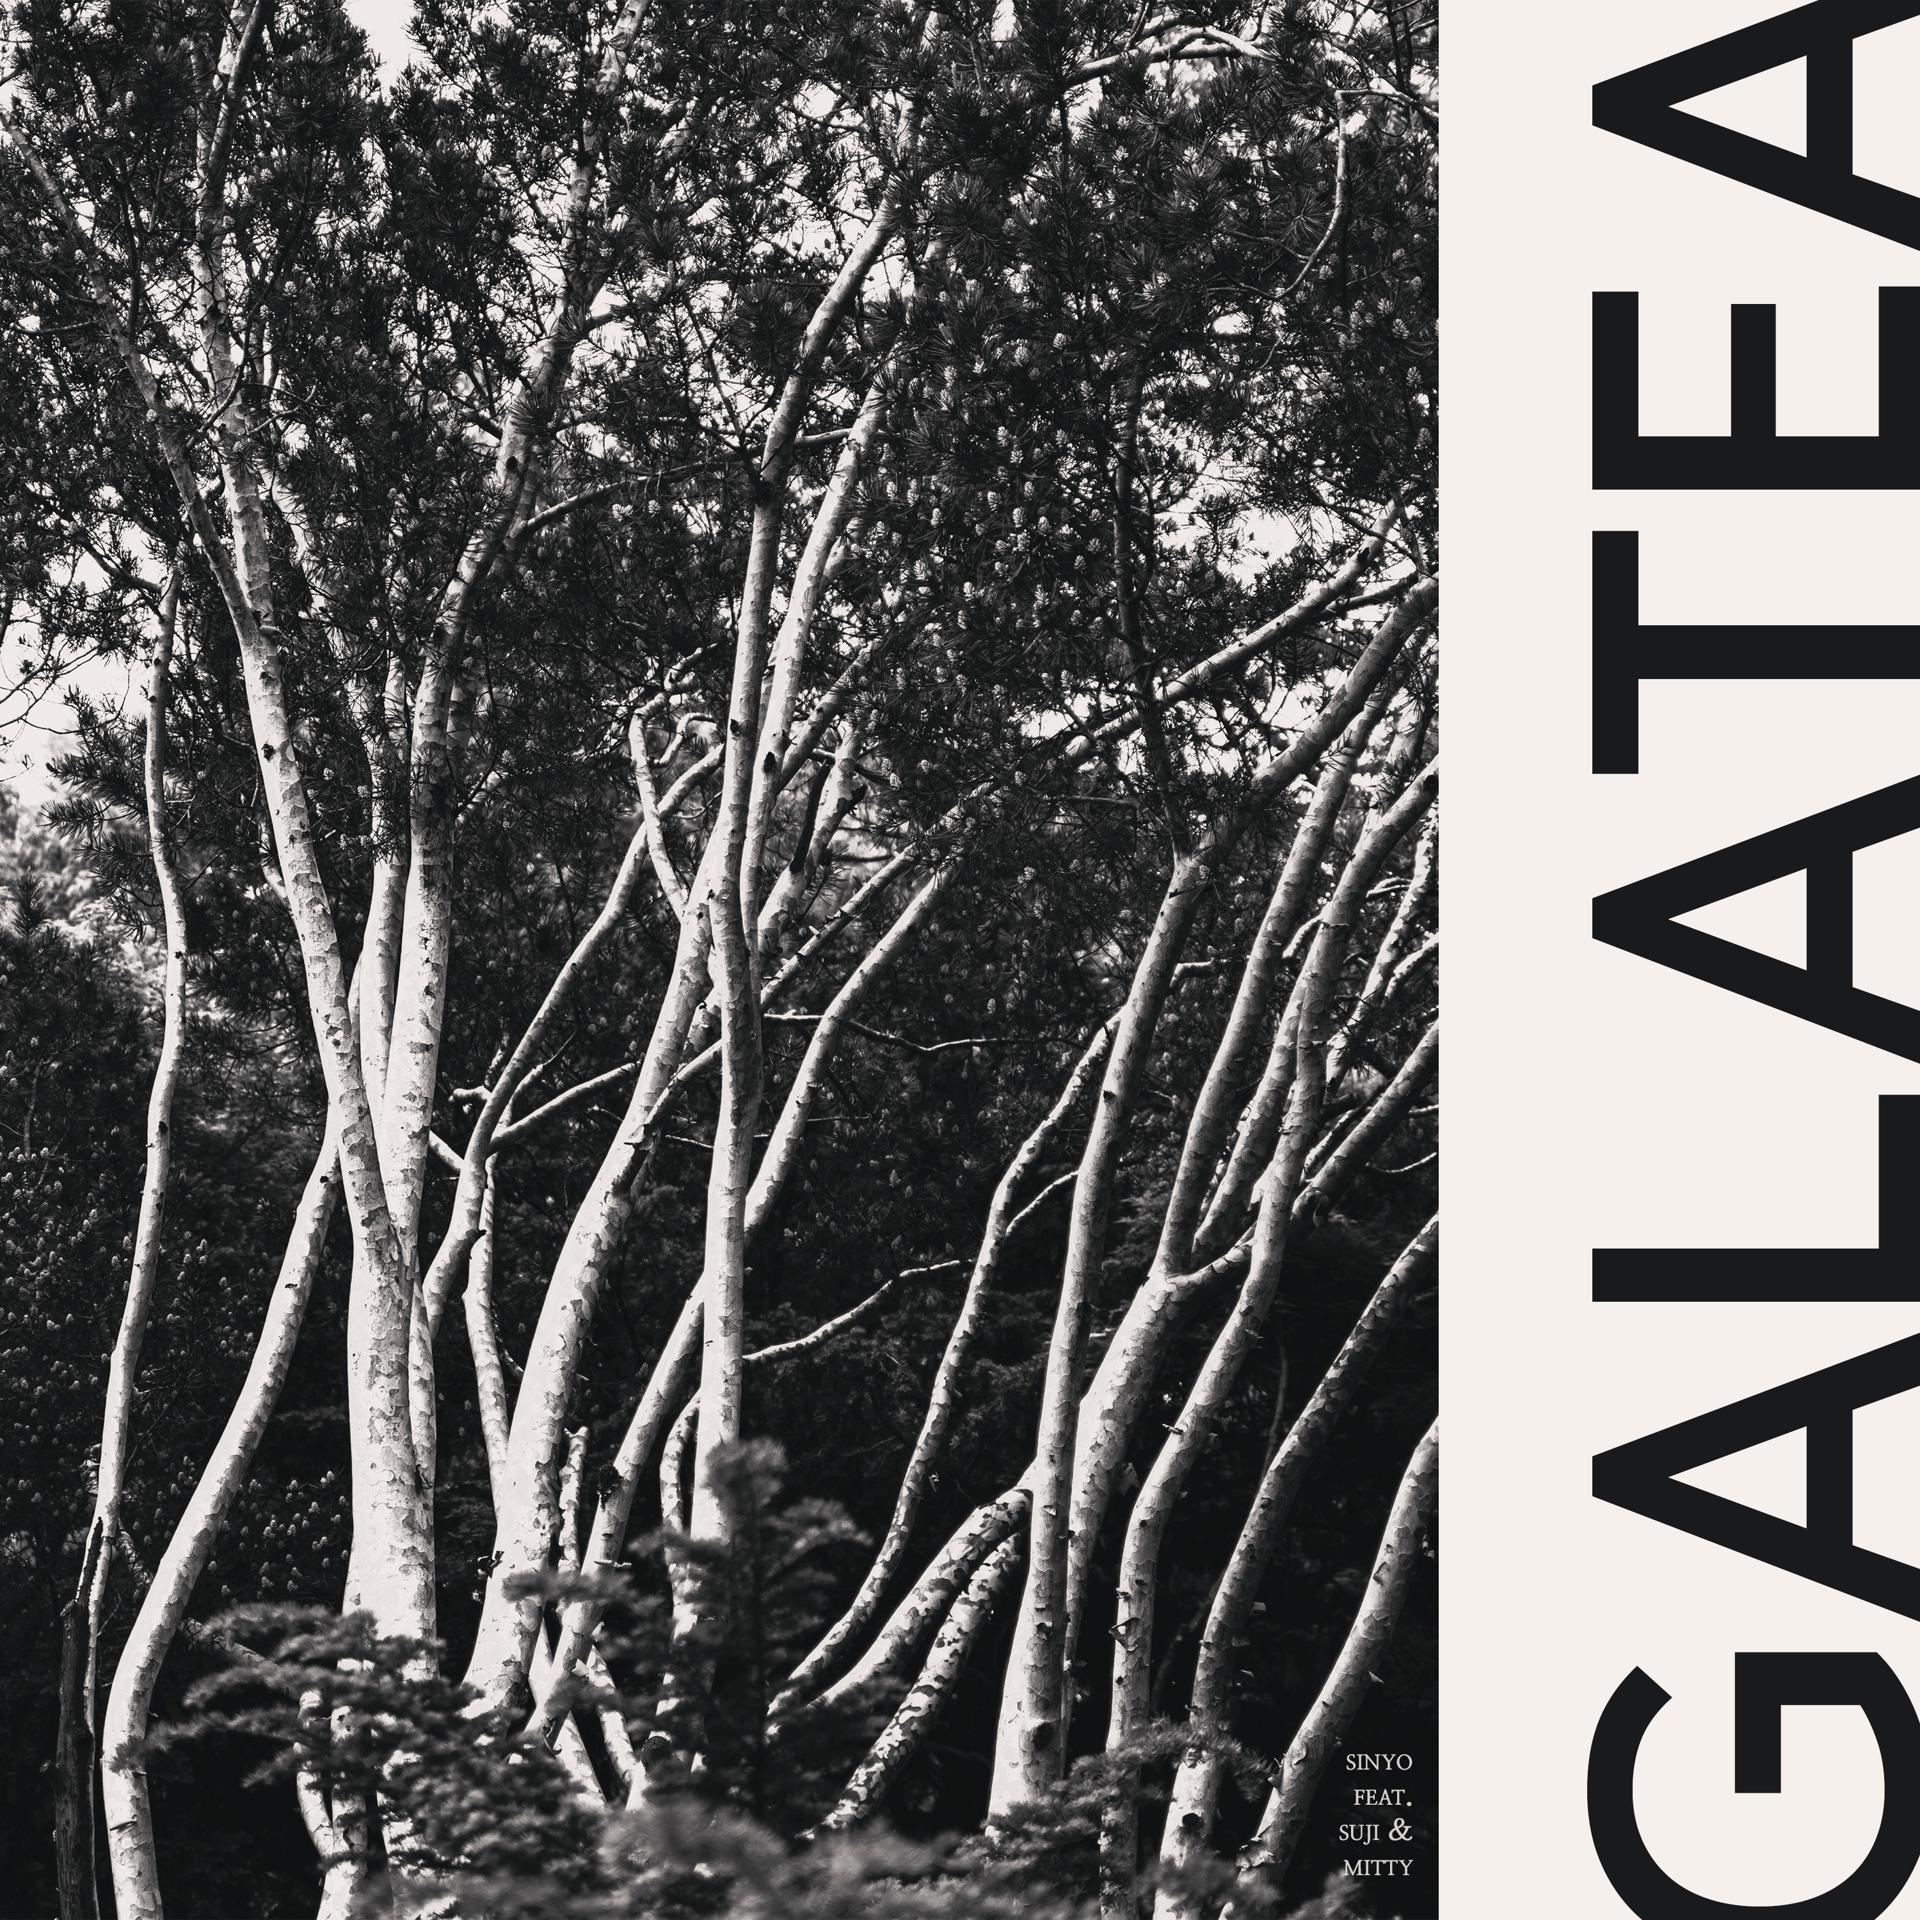 Постер альбома Galatea